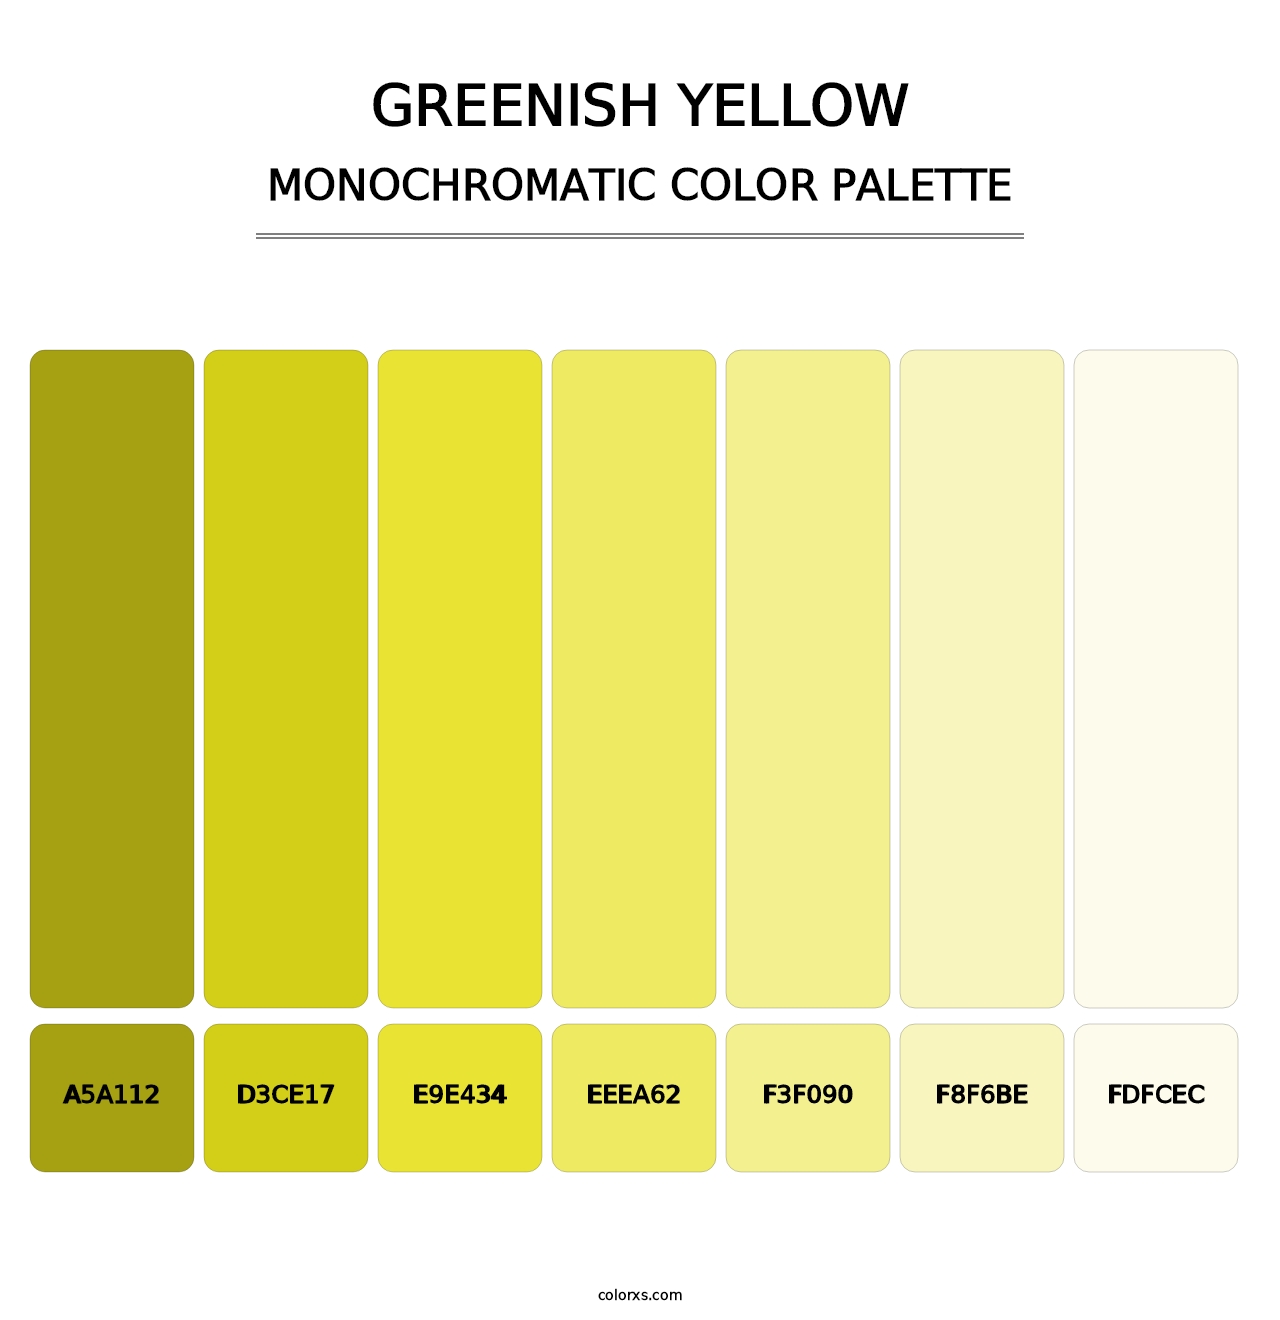 Greenish Yellow - Monochromatic Color Palette